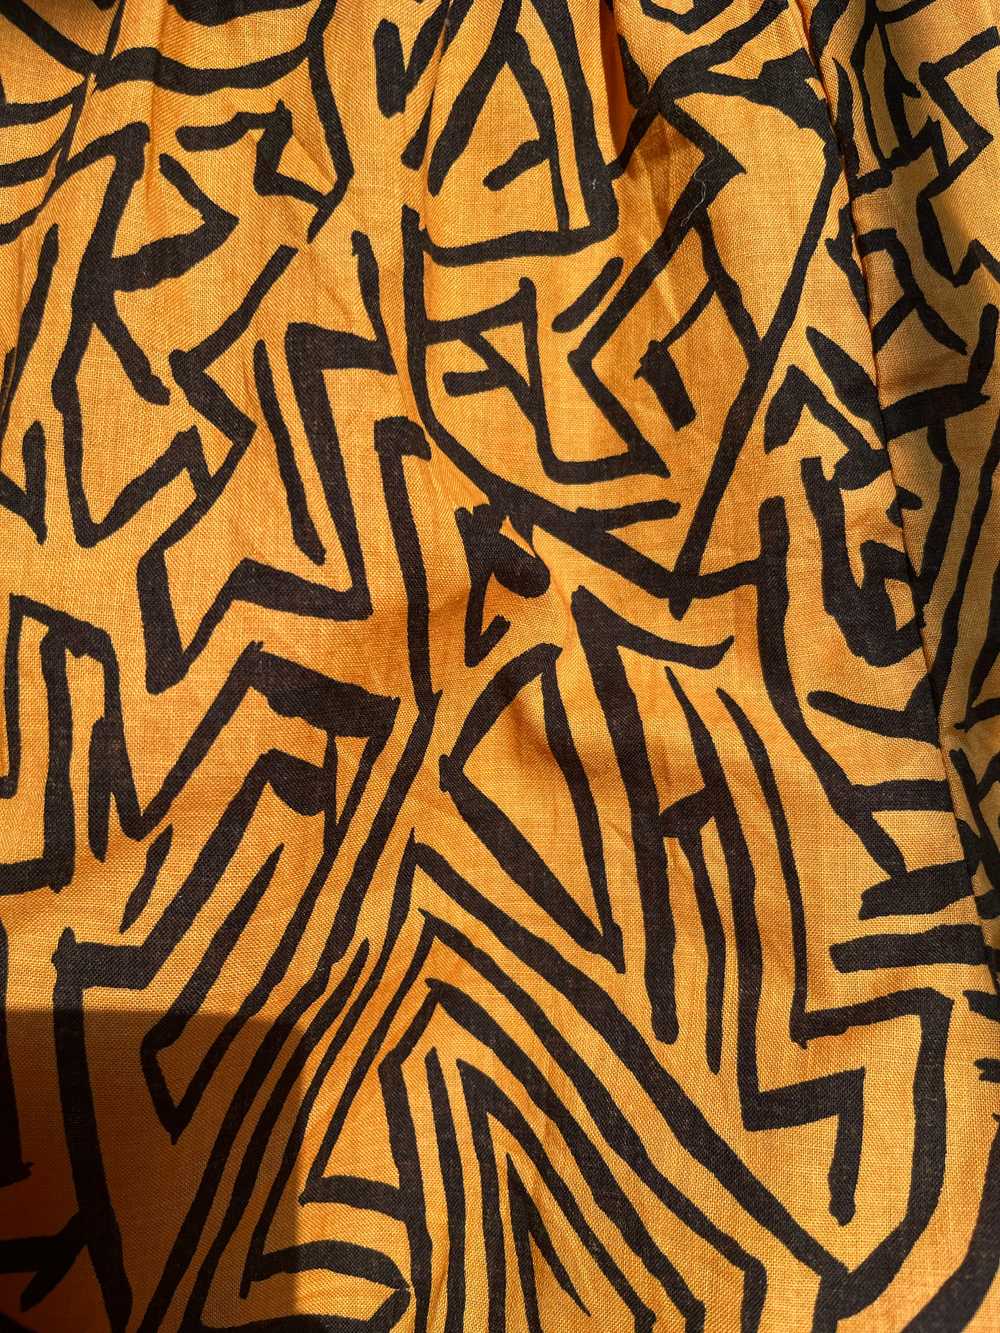 80s/90s Orange and Black abstract swim trunks - image 2